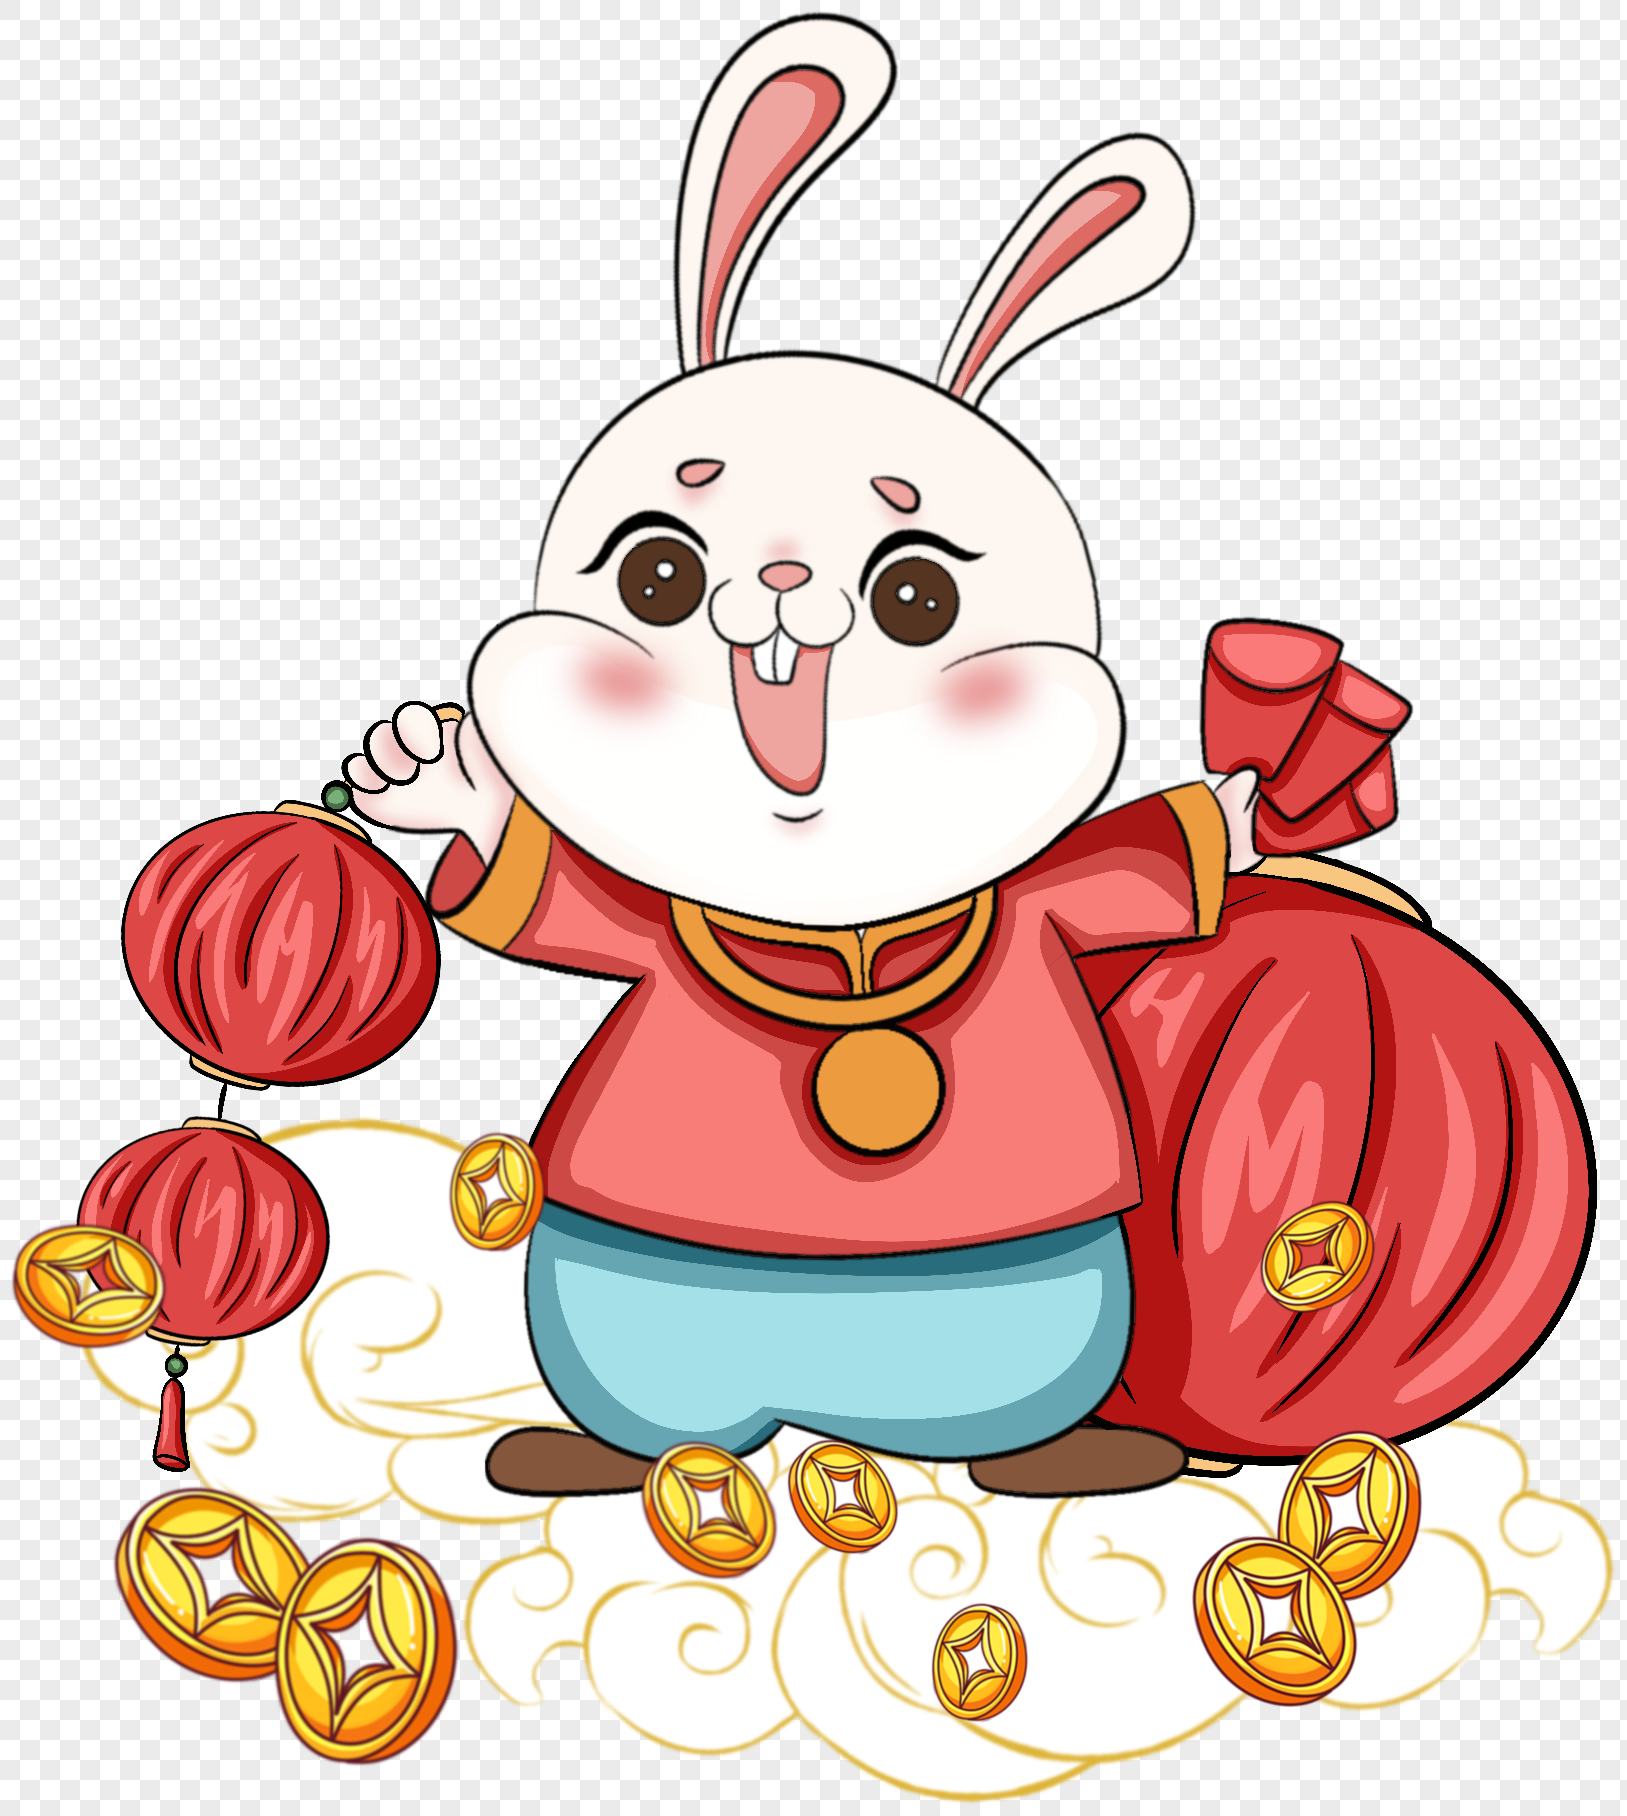 Rabbit Emoji Clipart Hd PNG, Cute Rabbit Emoji Red Packet, Emoticons, Red  Envelope, Rabbit PNG Image For Free Download